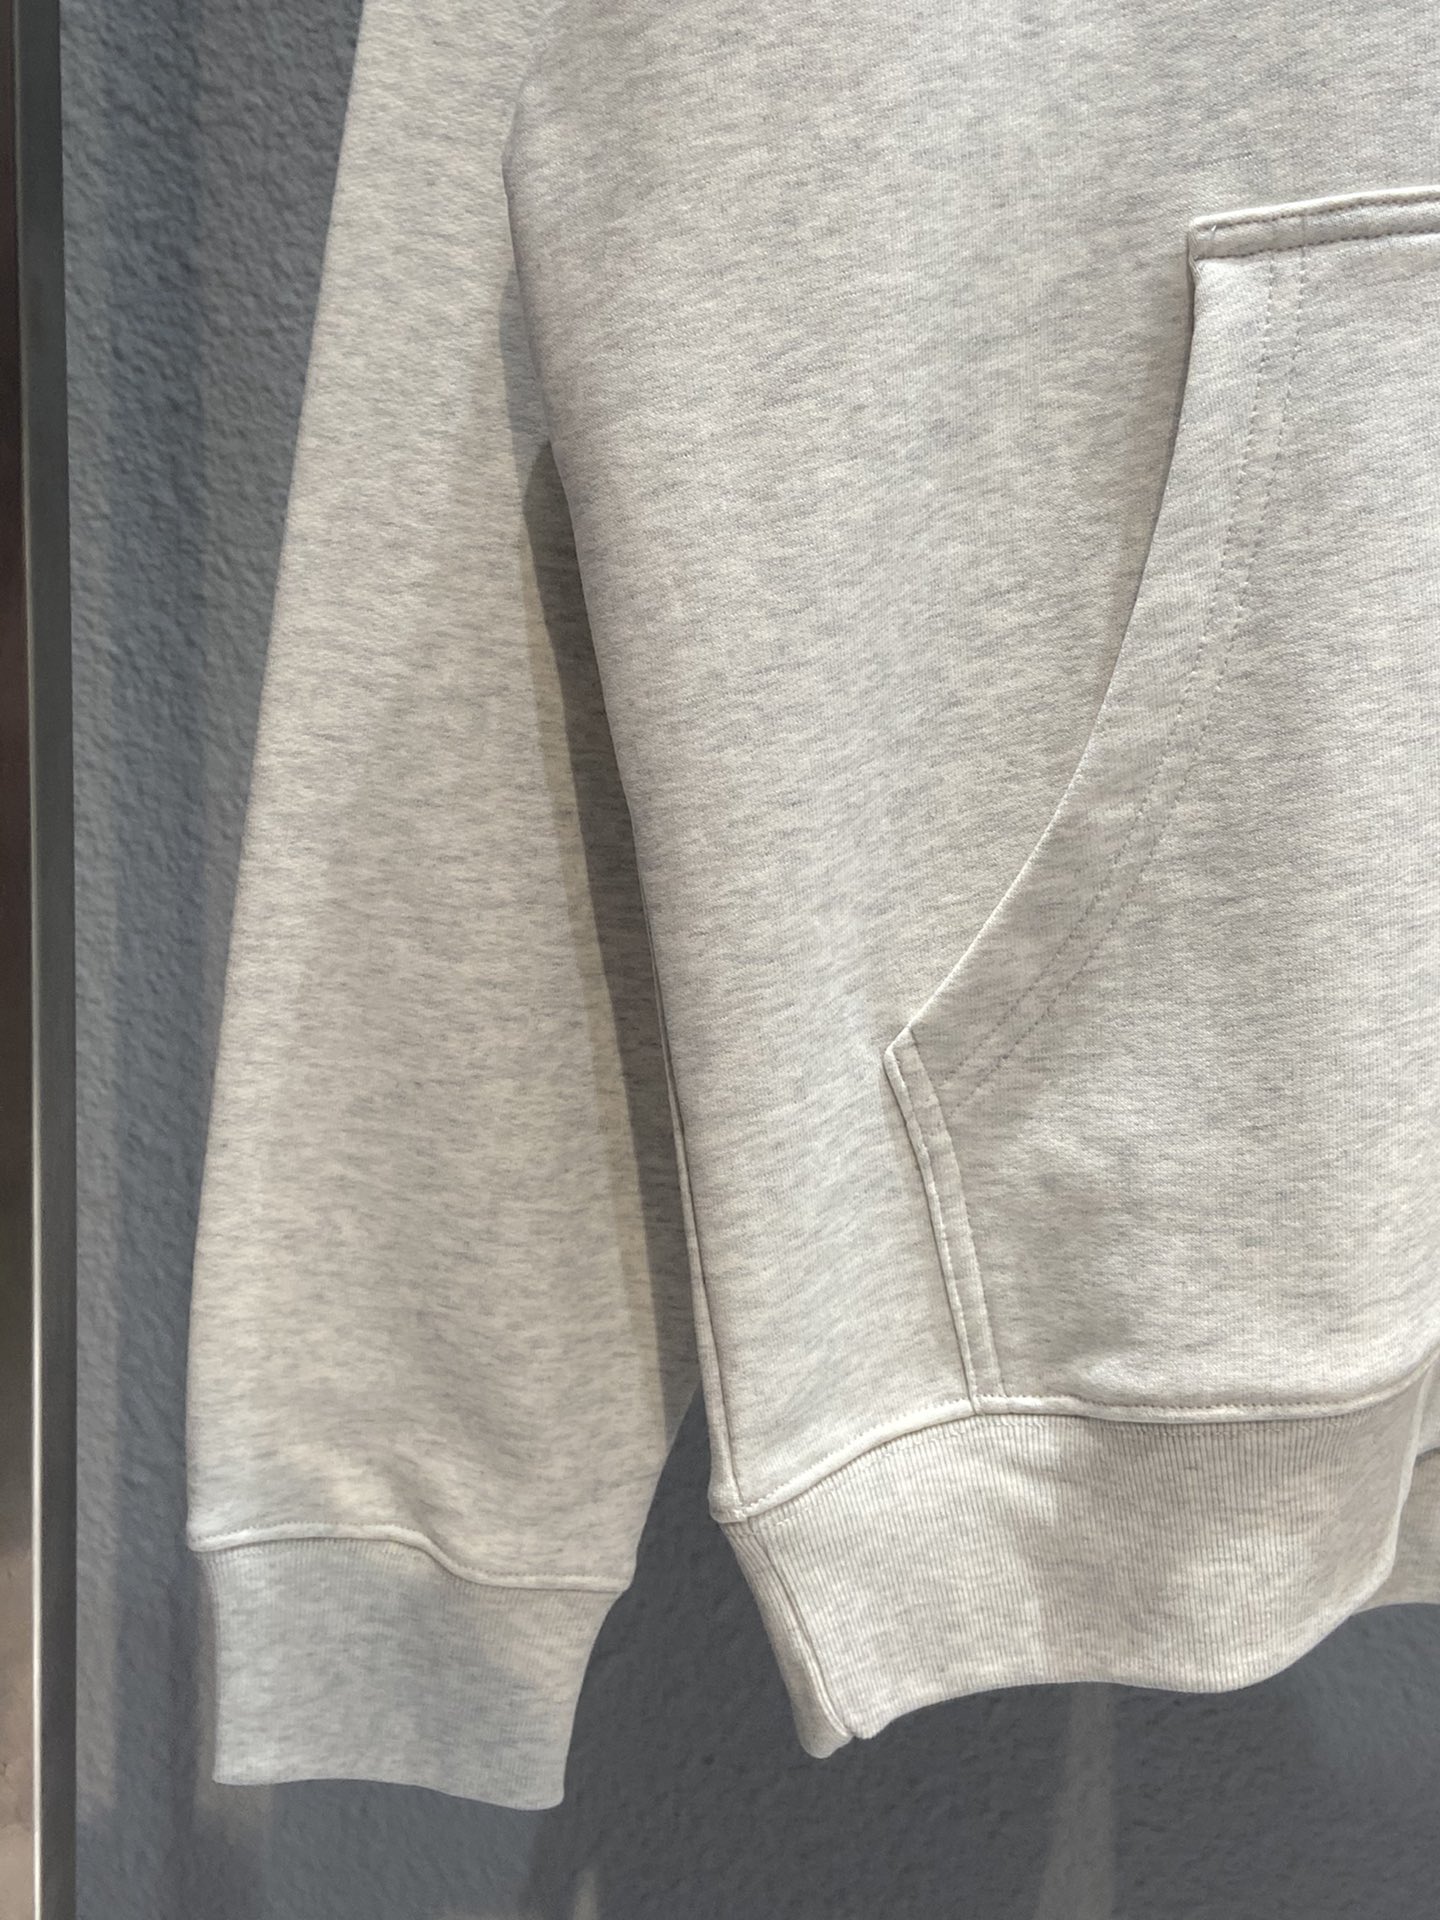 Balenciaga Hoodie Logo Medium Fit in Gray